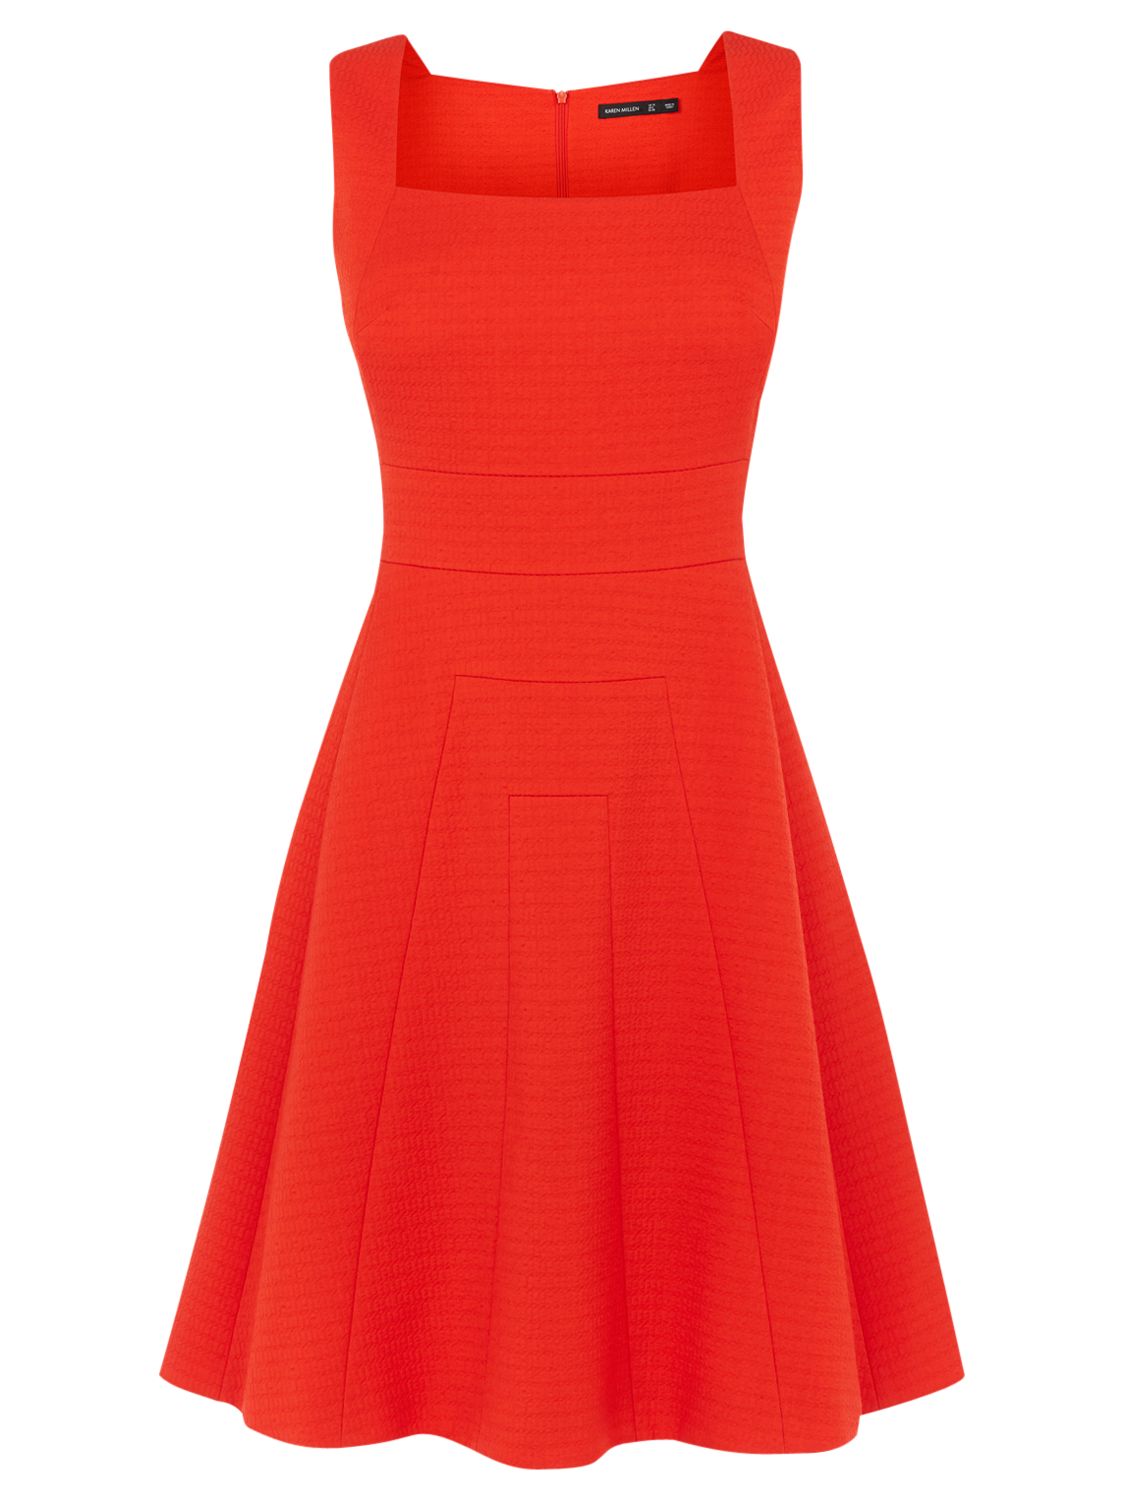 Karen Millen Textured Day Dress, Orange at John Lewis & Partners